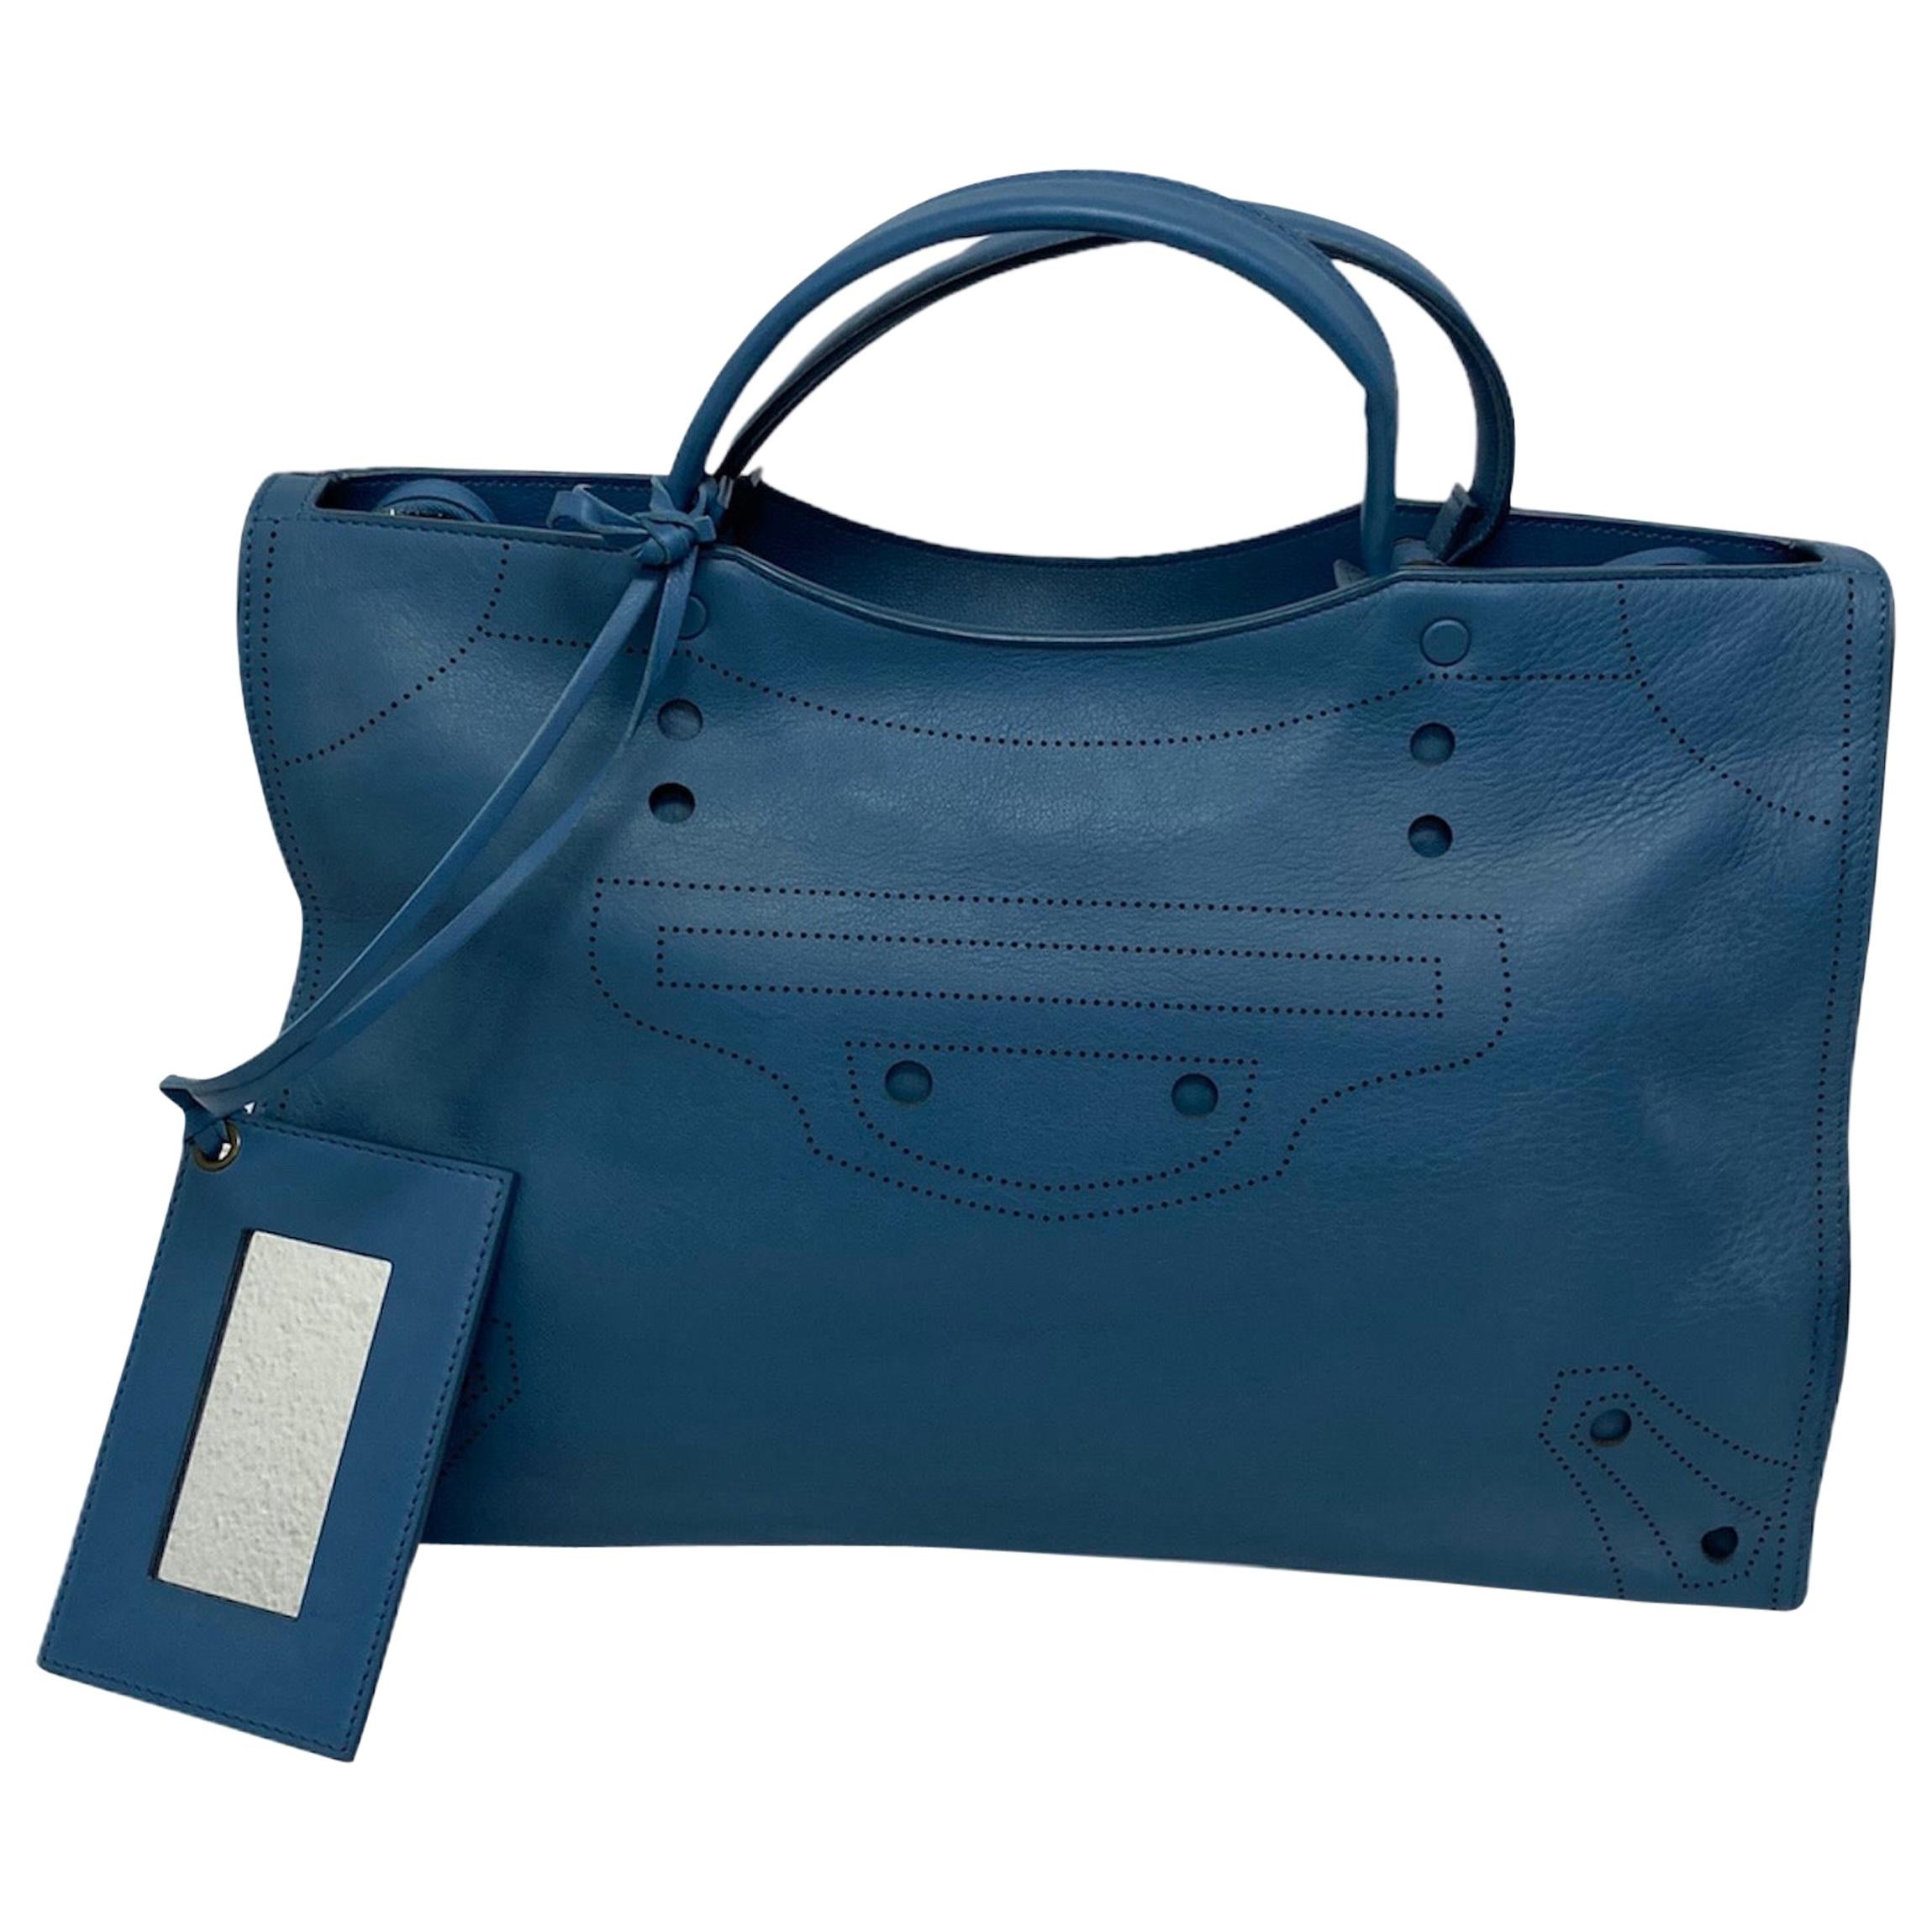 Balenciaga Blue Leather City Bag